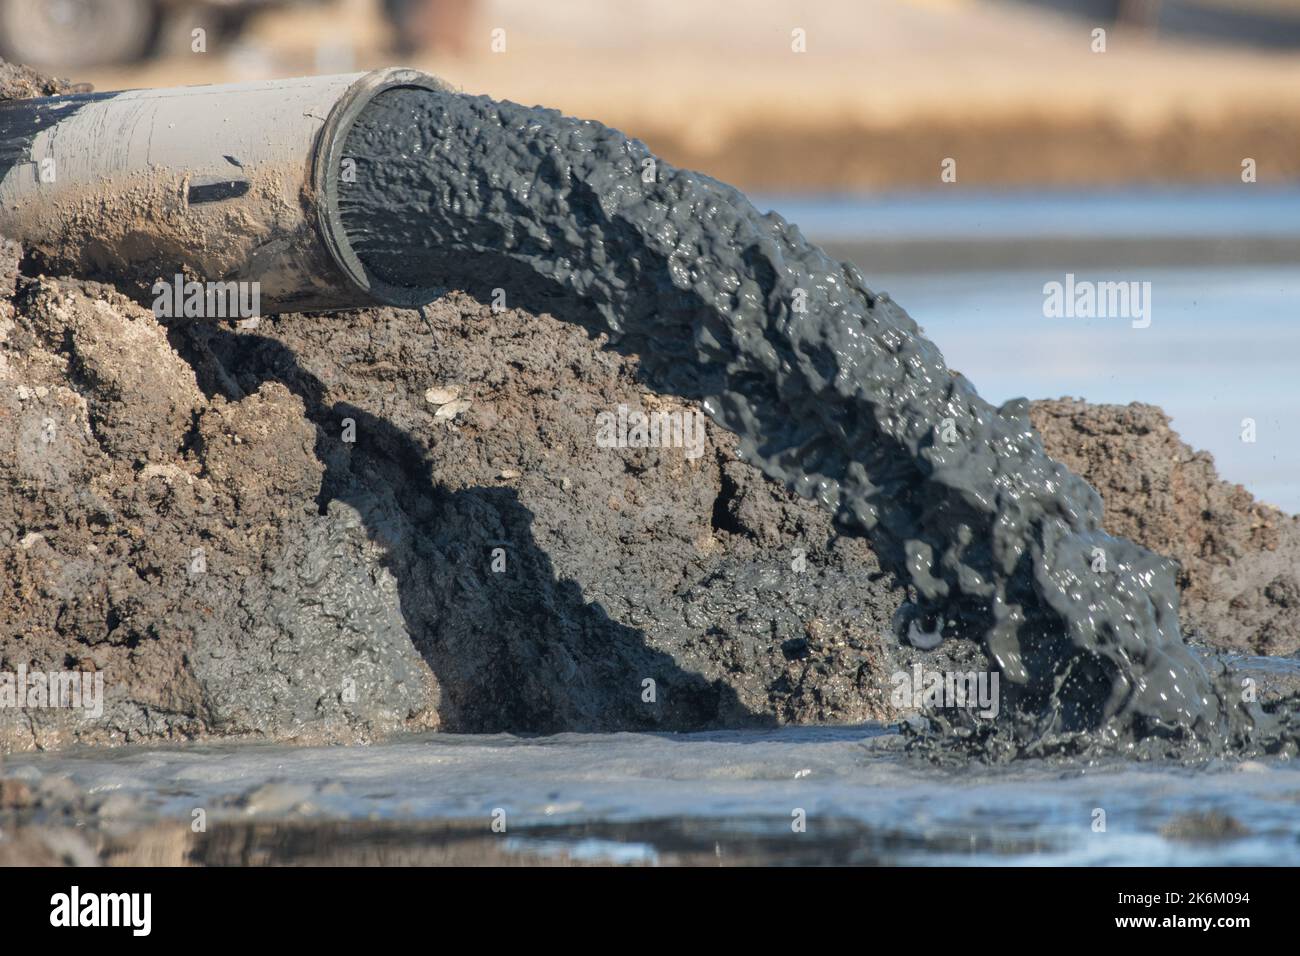 A pipe discharging sludge in the San Francisco Bay area of California. Stock Photo